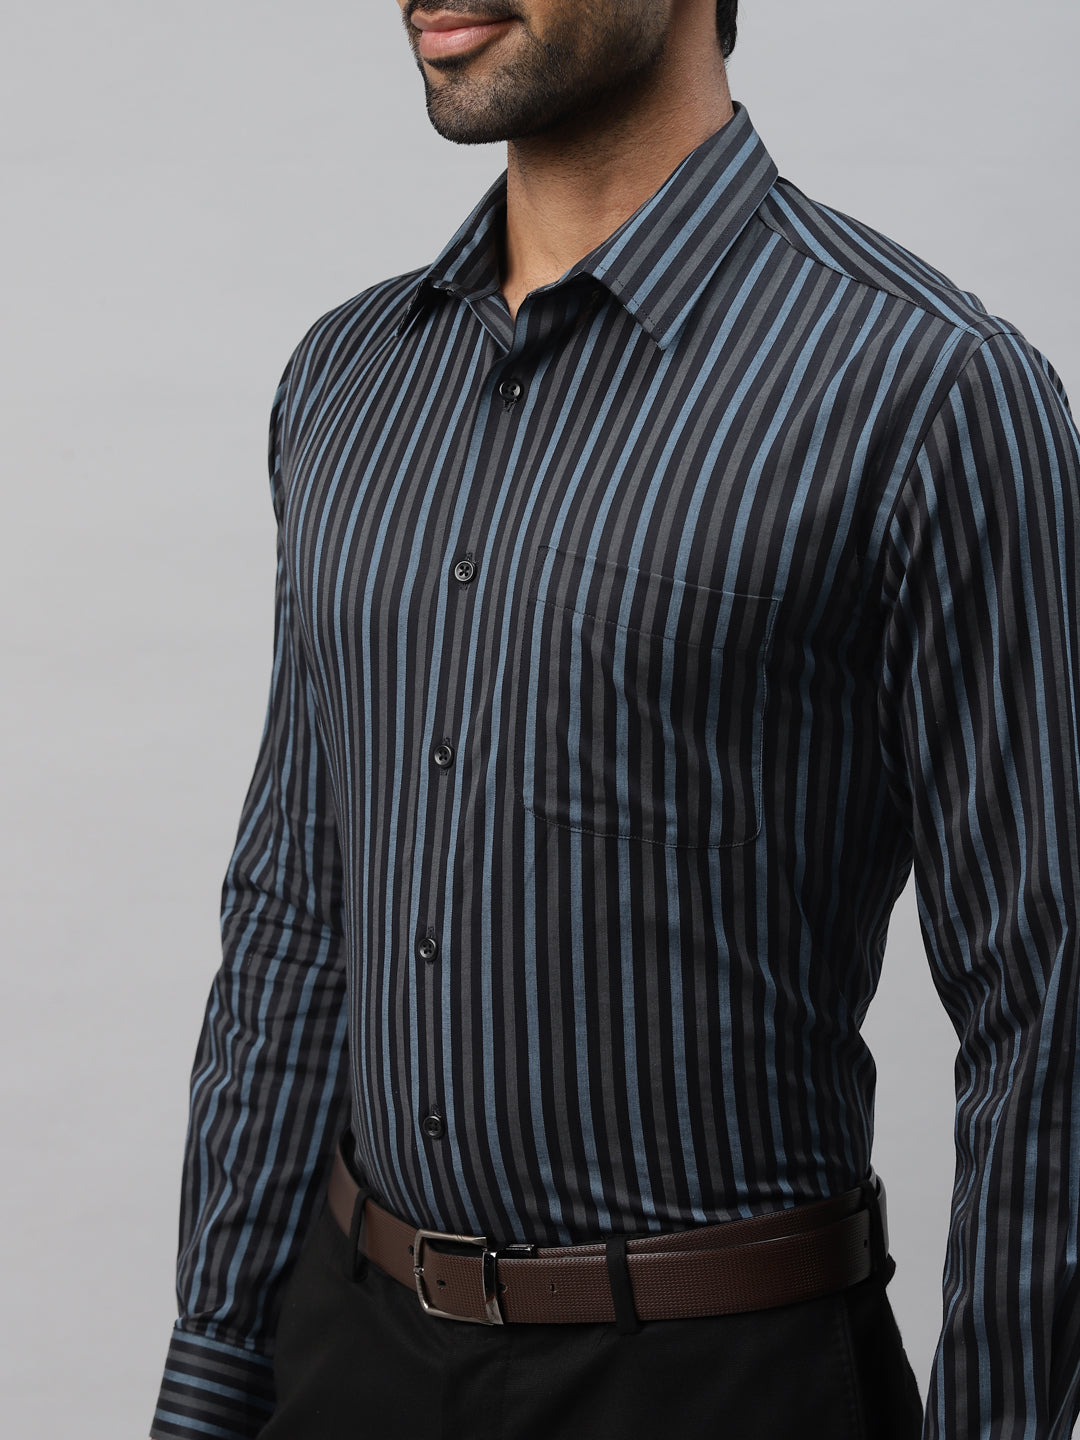 Don Vino Men's Navy Blue Stripes Slim Fit Shirt